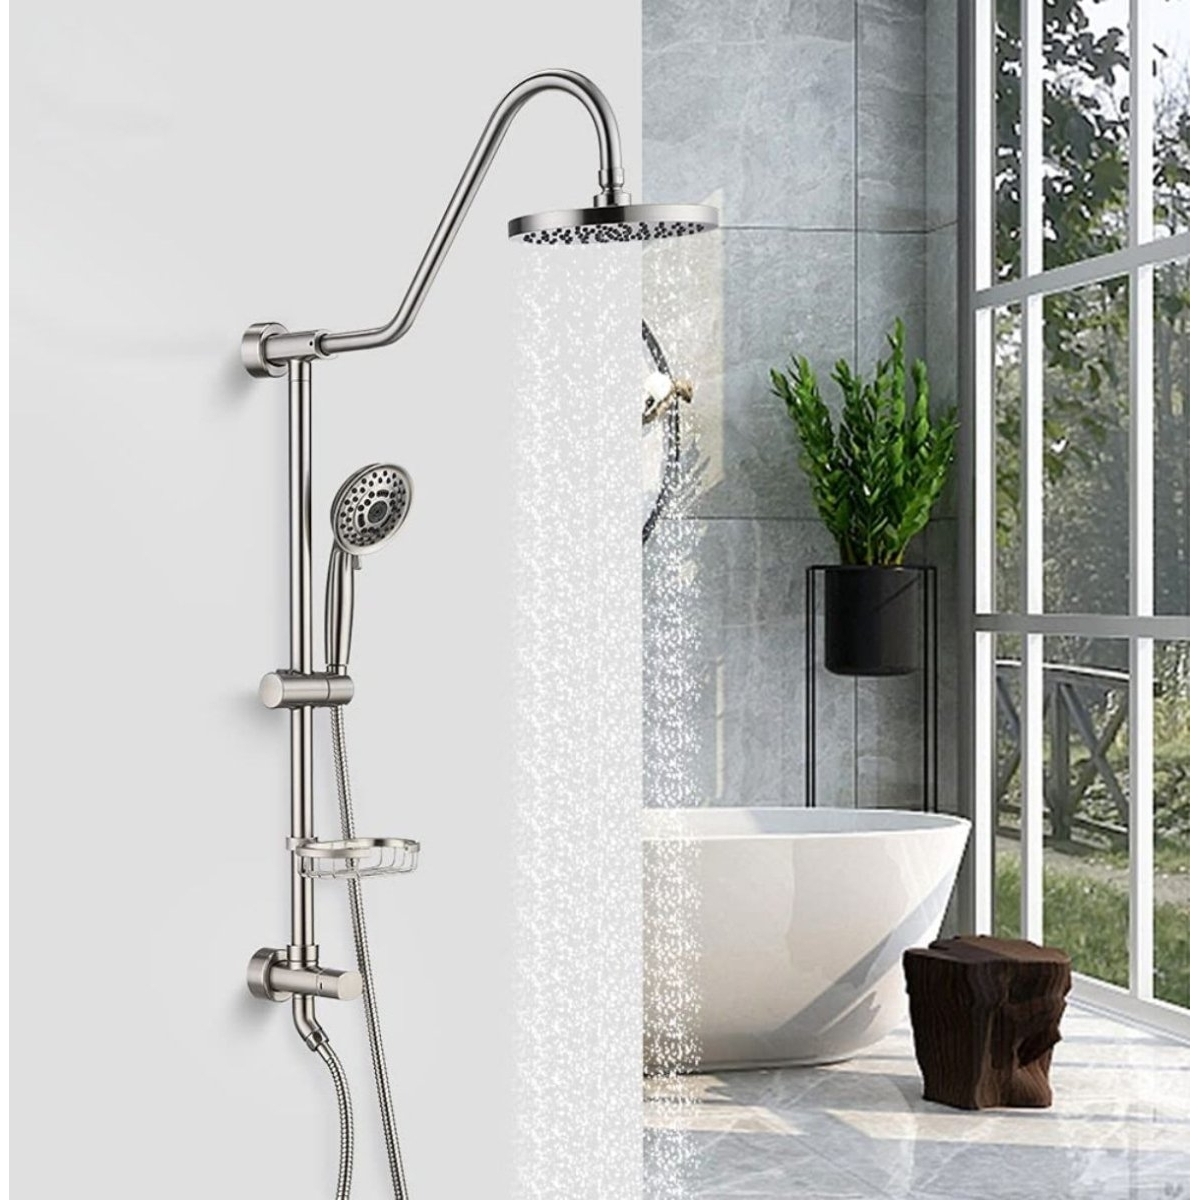 Exbrite Shower System With Rain Showerhead Brushed Nickel Finish